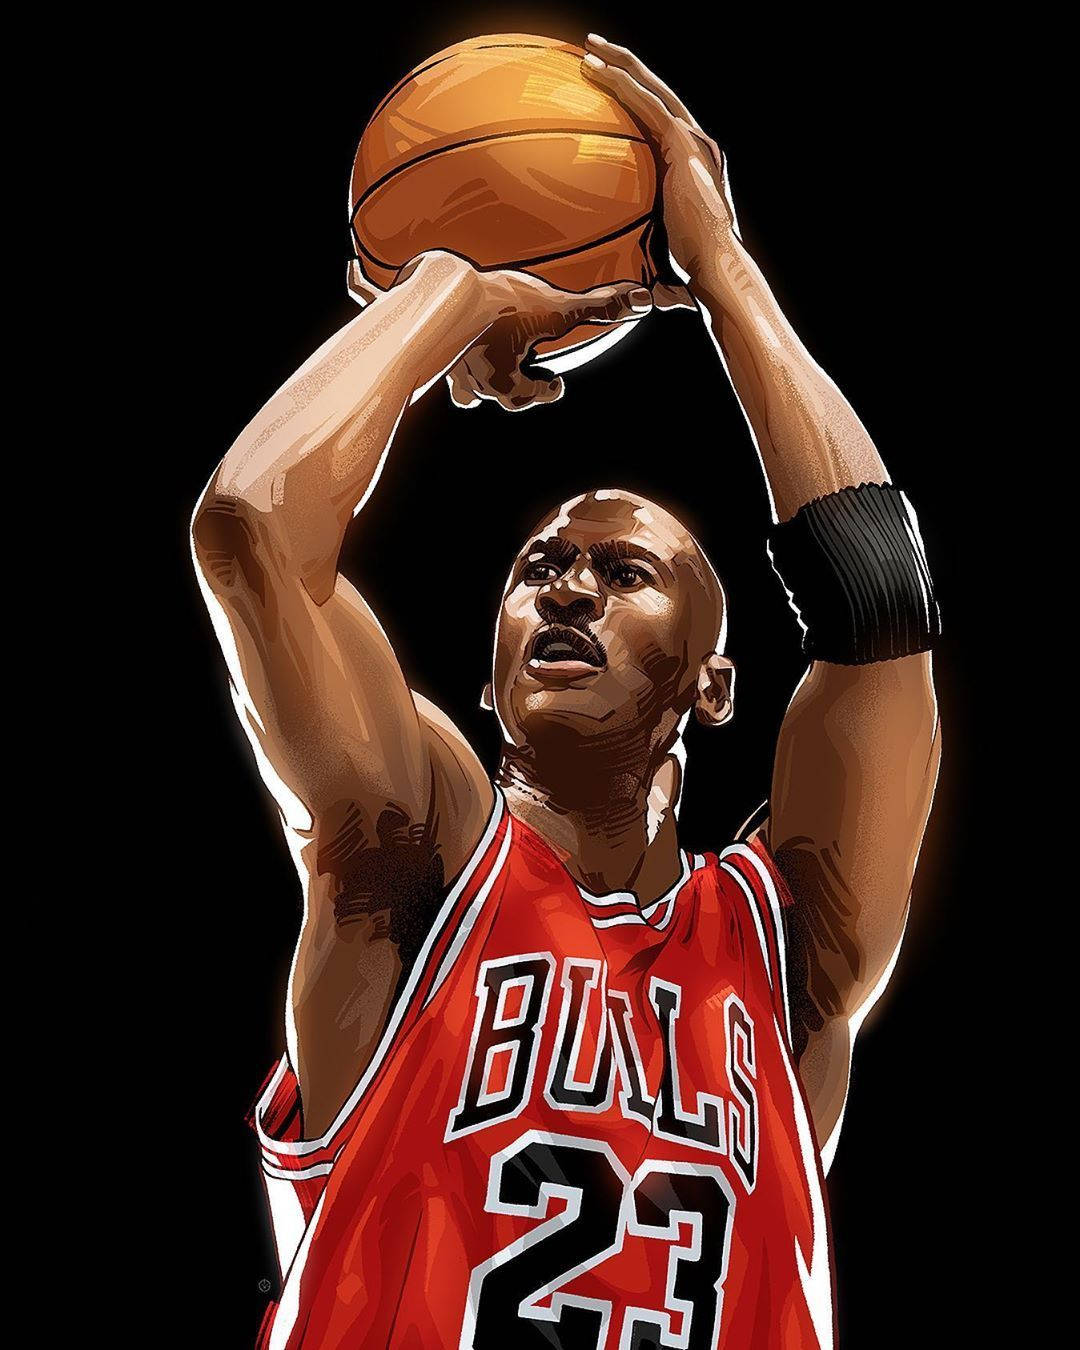 Cool Pop Art Style Michael Jordan Wallpaper